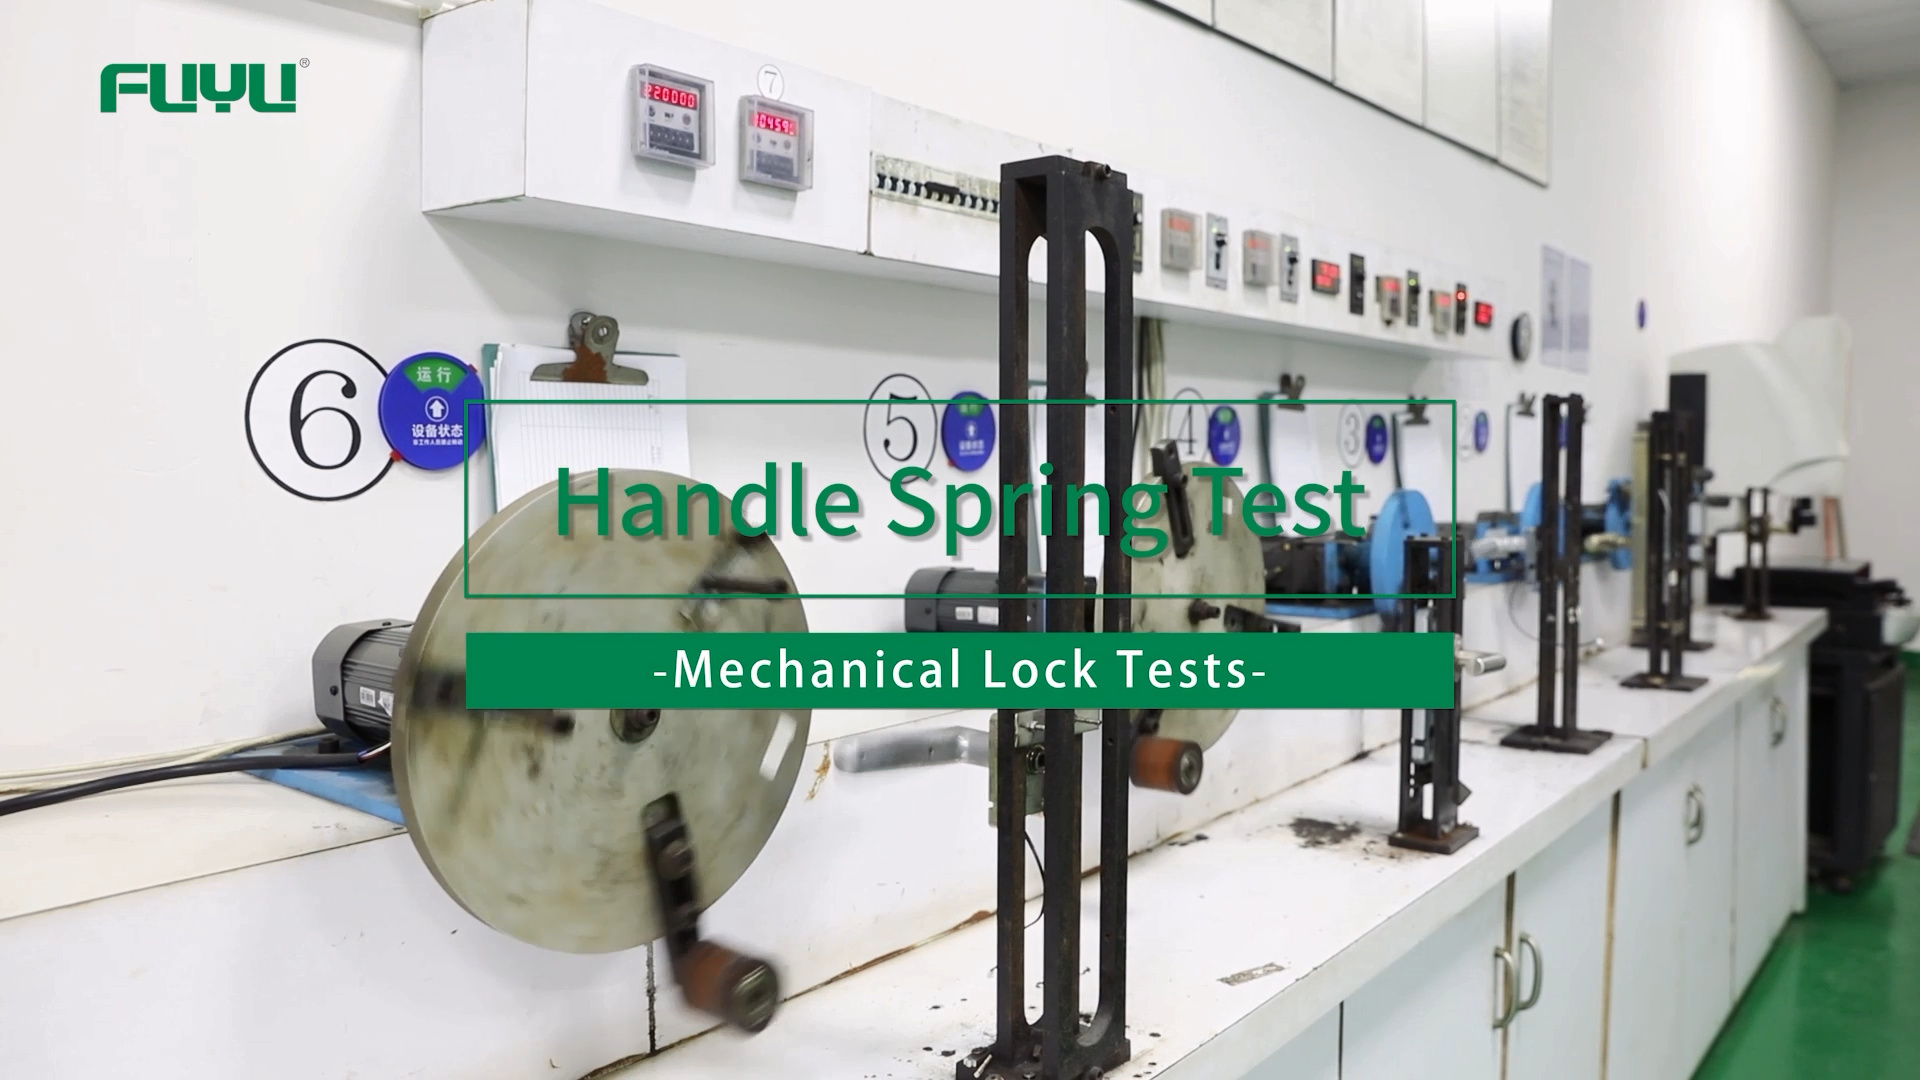 Handle Spring Test of FUYU Mechanical Lock Tests